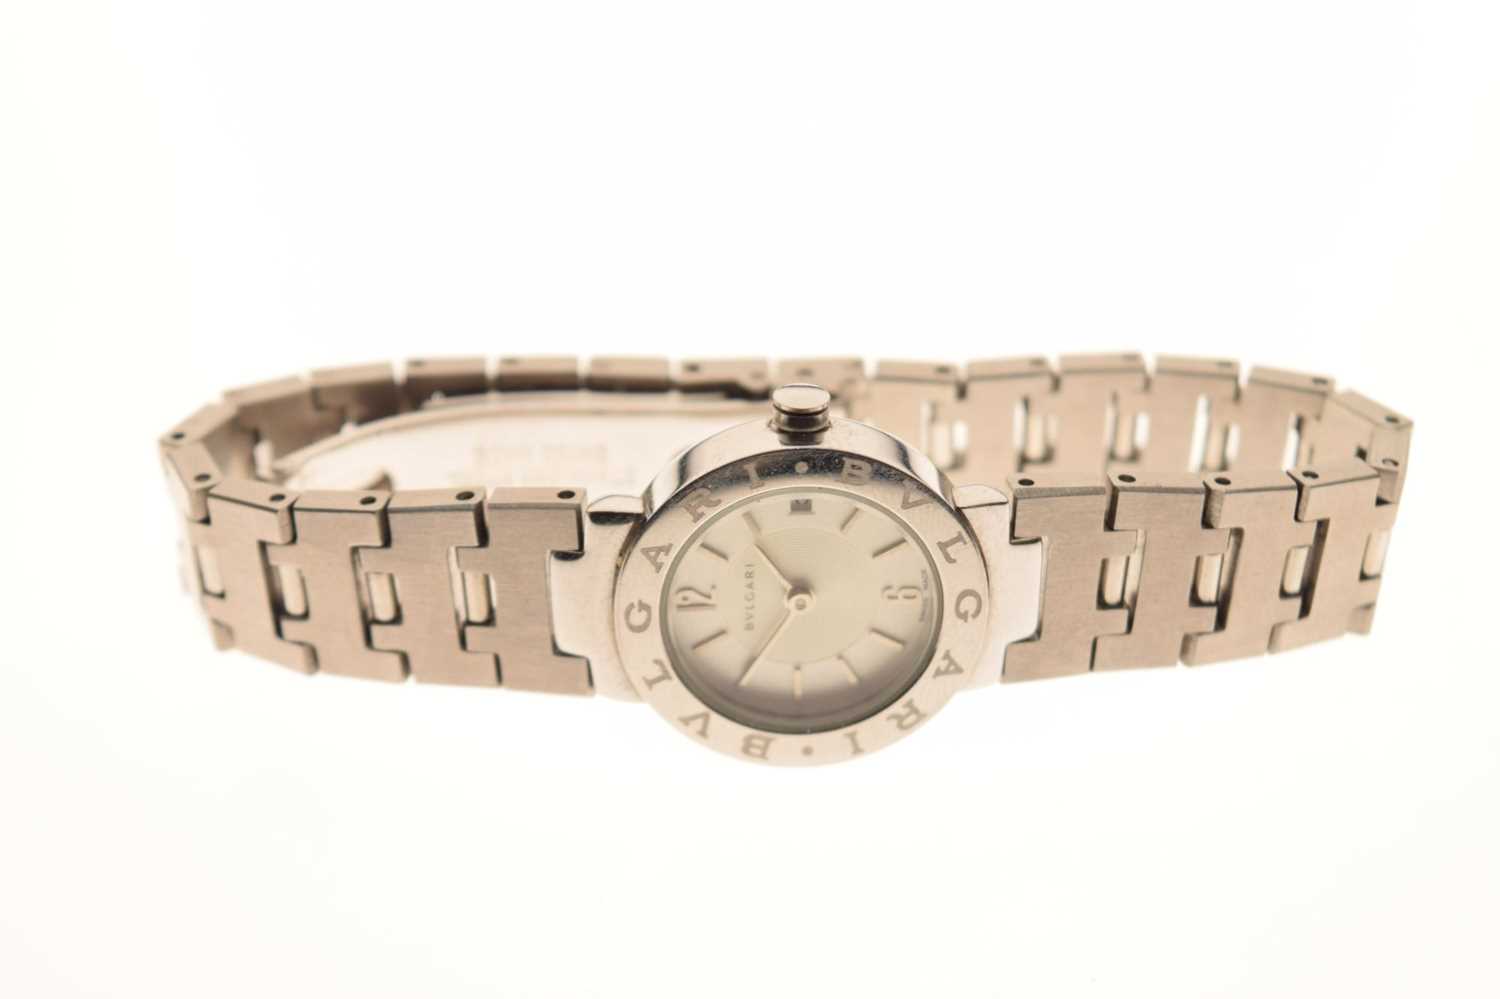 Bulgari - Lady's stainless steel quartz wristwatch - Image 10 of 10